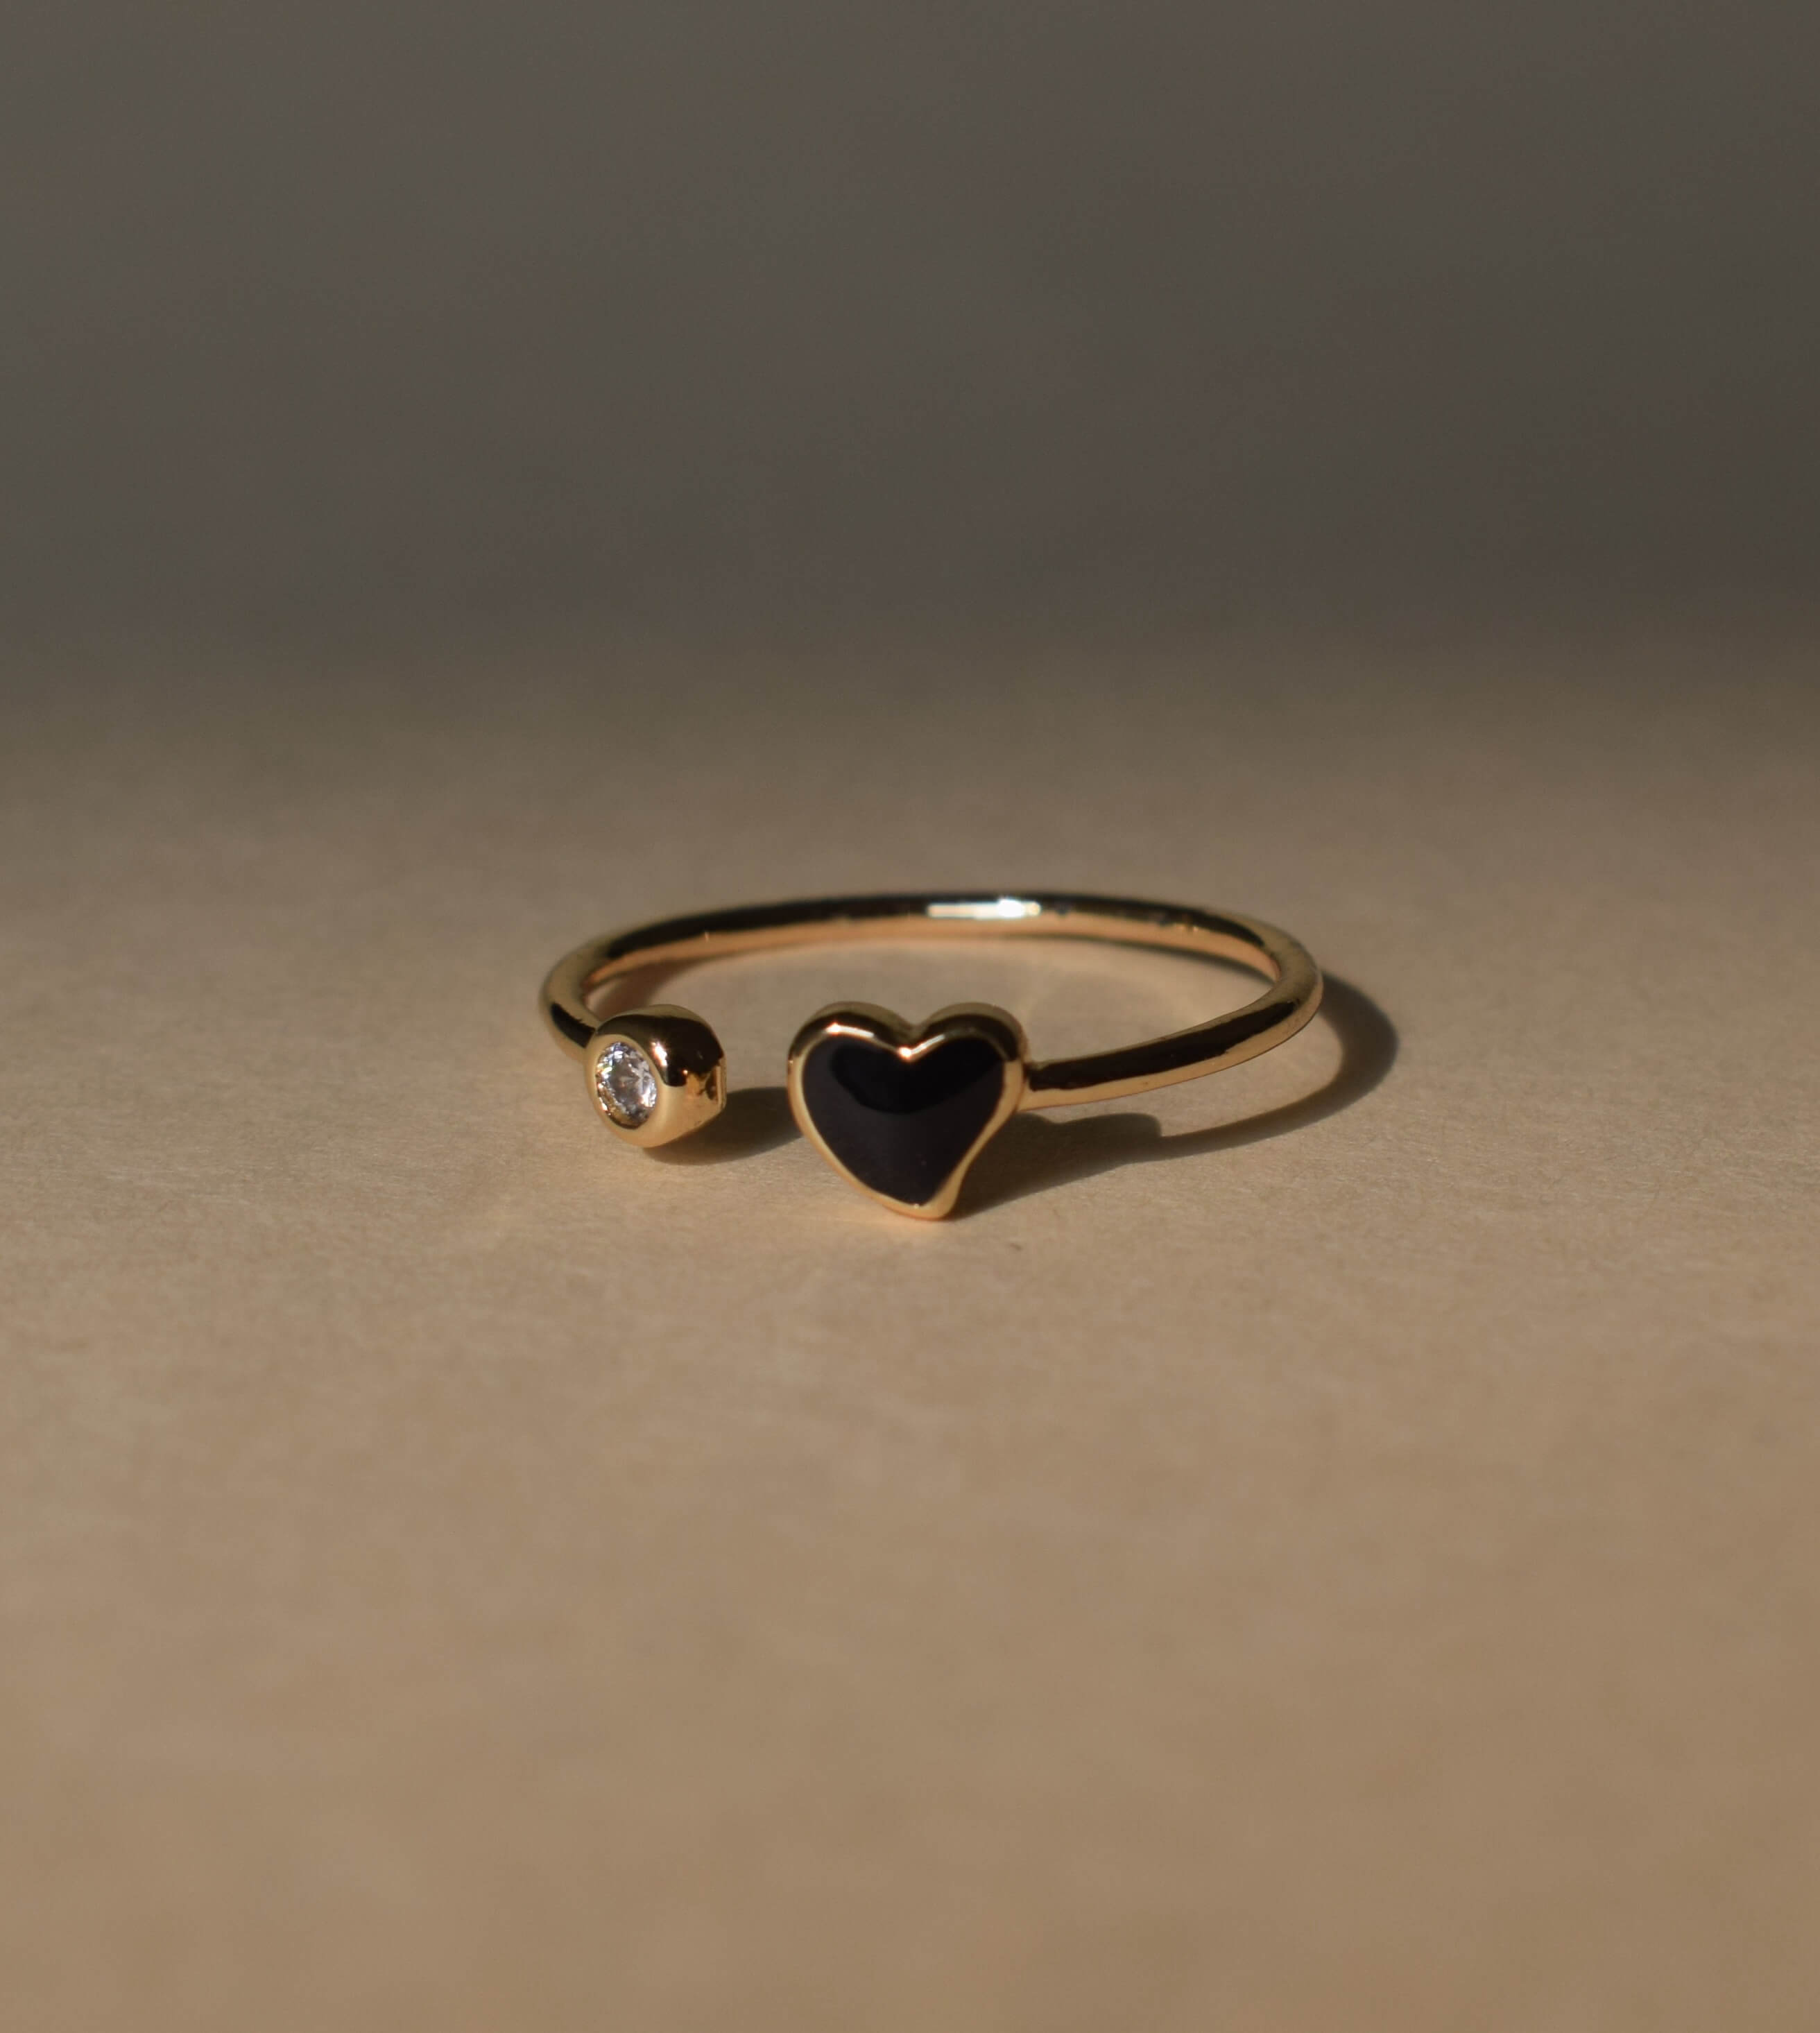 Solo Heart Black Diamond Ring — Iz&Co.